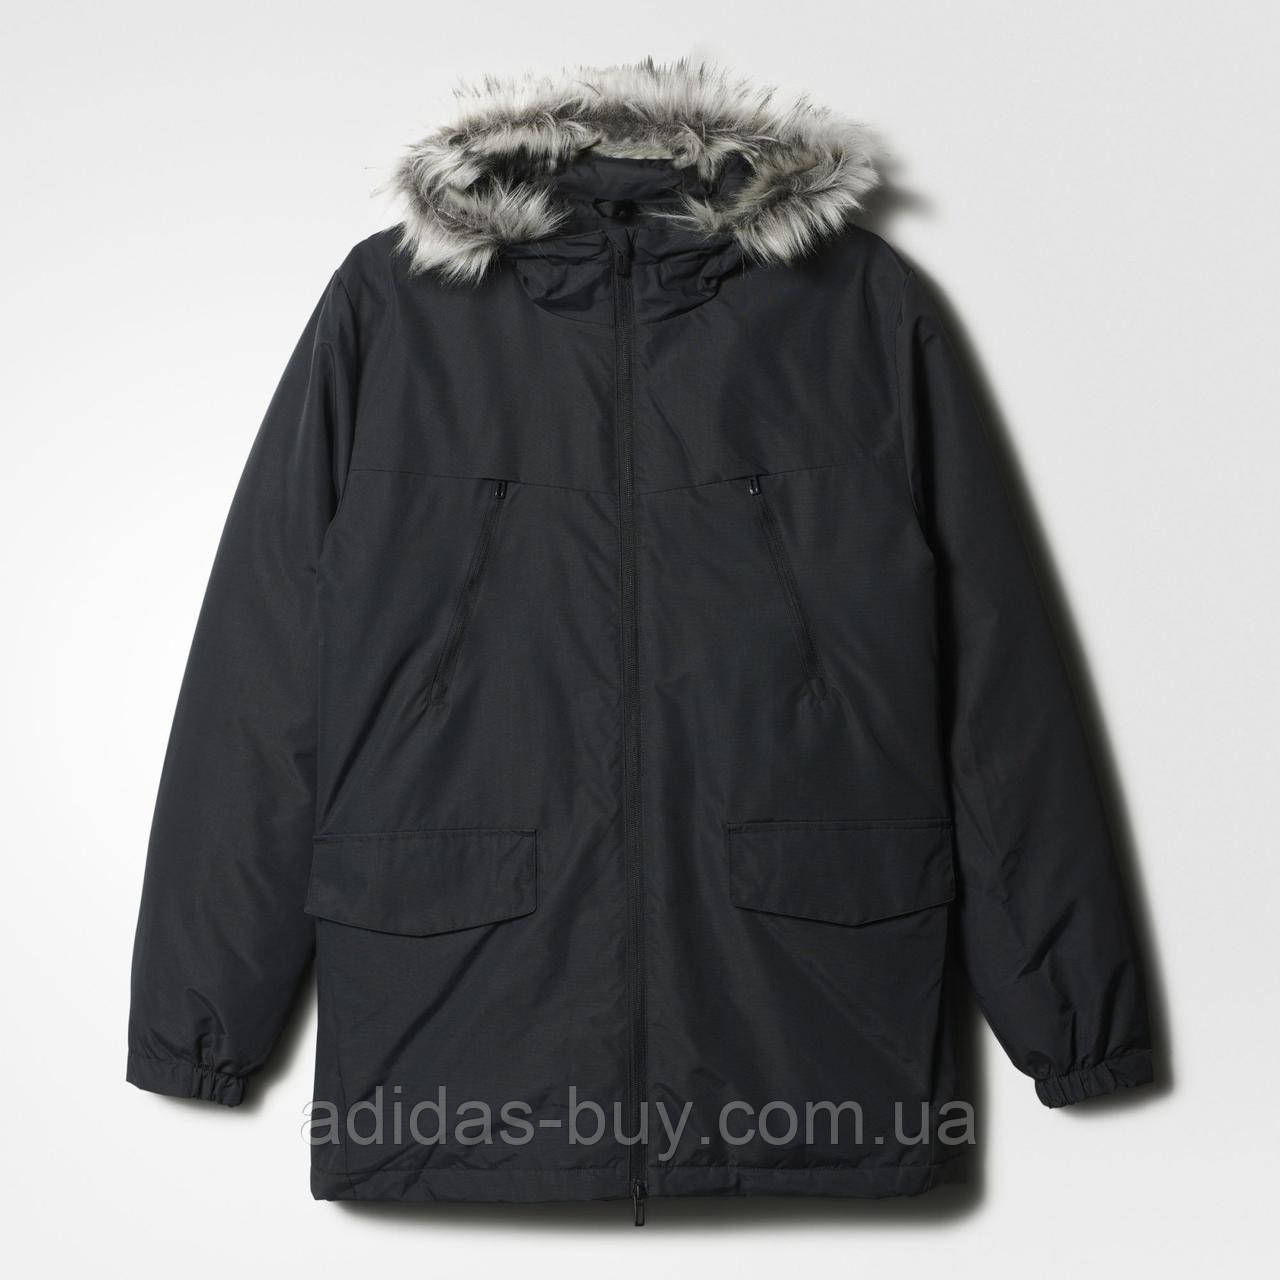 Пуховик Парка мужская Adidas Sdp Jacket Fur AP9551, цена 2990 грн — Prom.ua  (ID#1534472526)